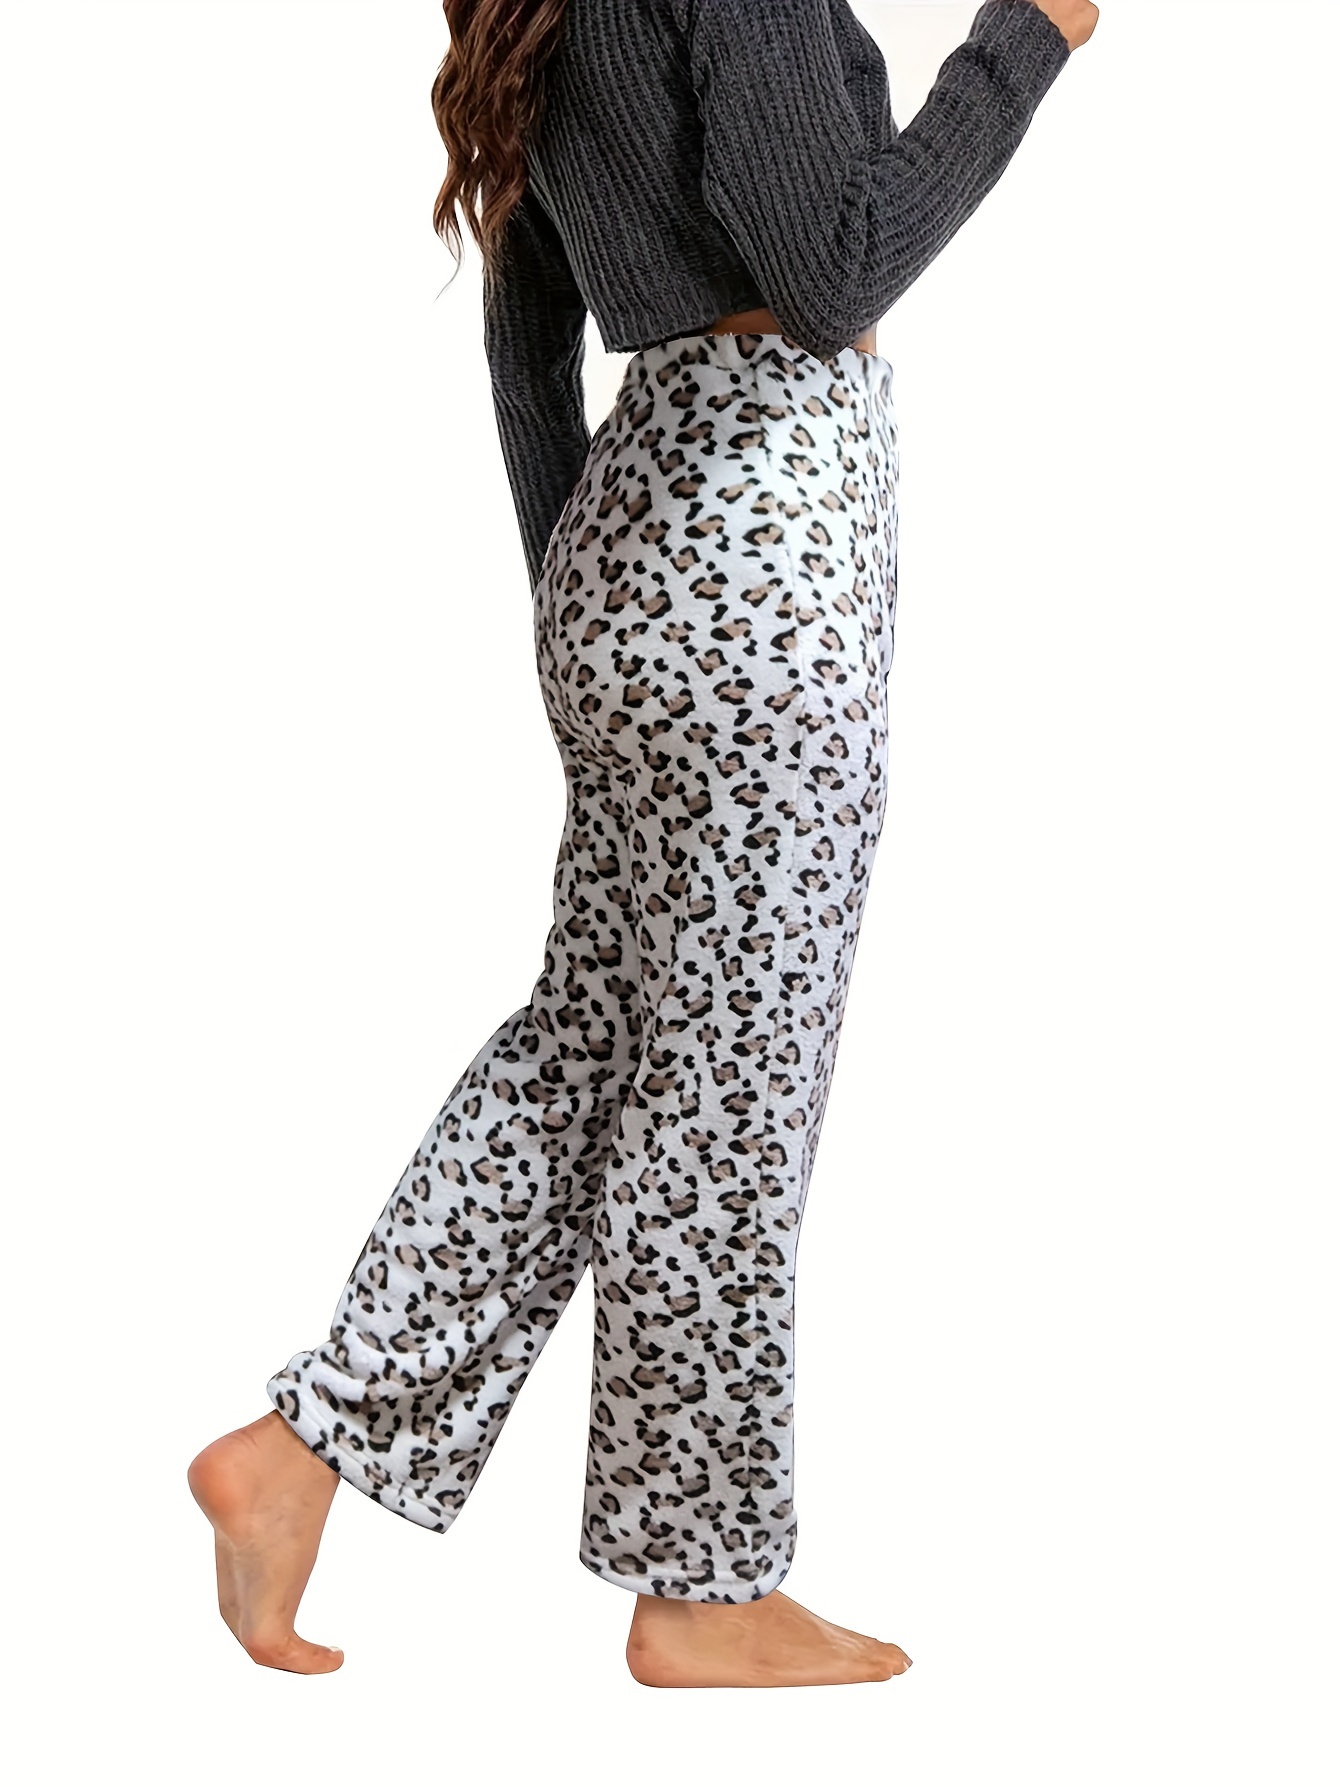 Women Lounge Pants, Women Casual Pants Elastic Tie Waist Snug Fit Leopard  Print Soft Classic Pockets For Sports For Lady White XL